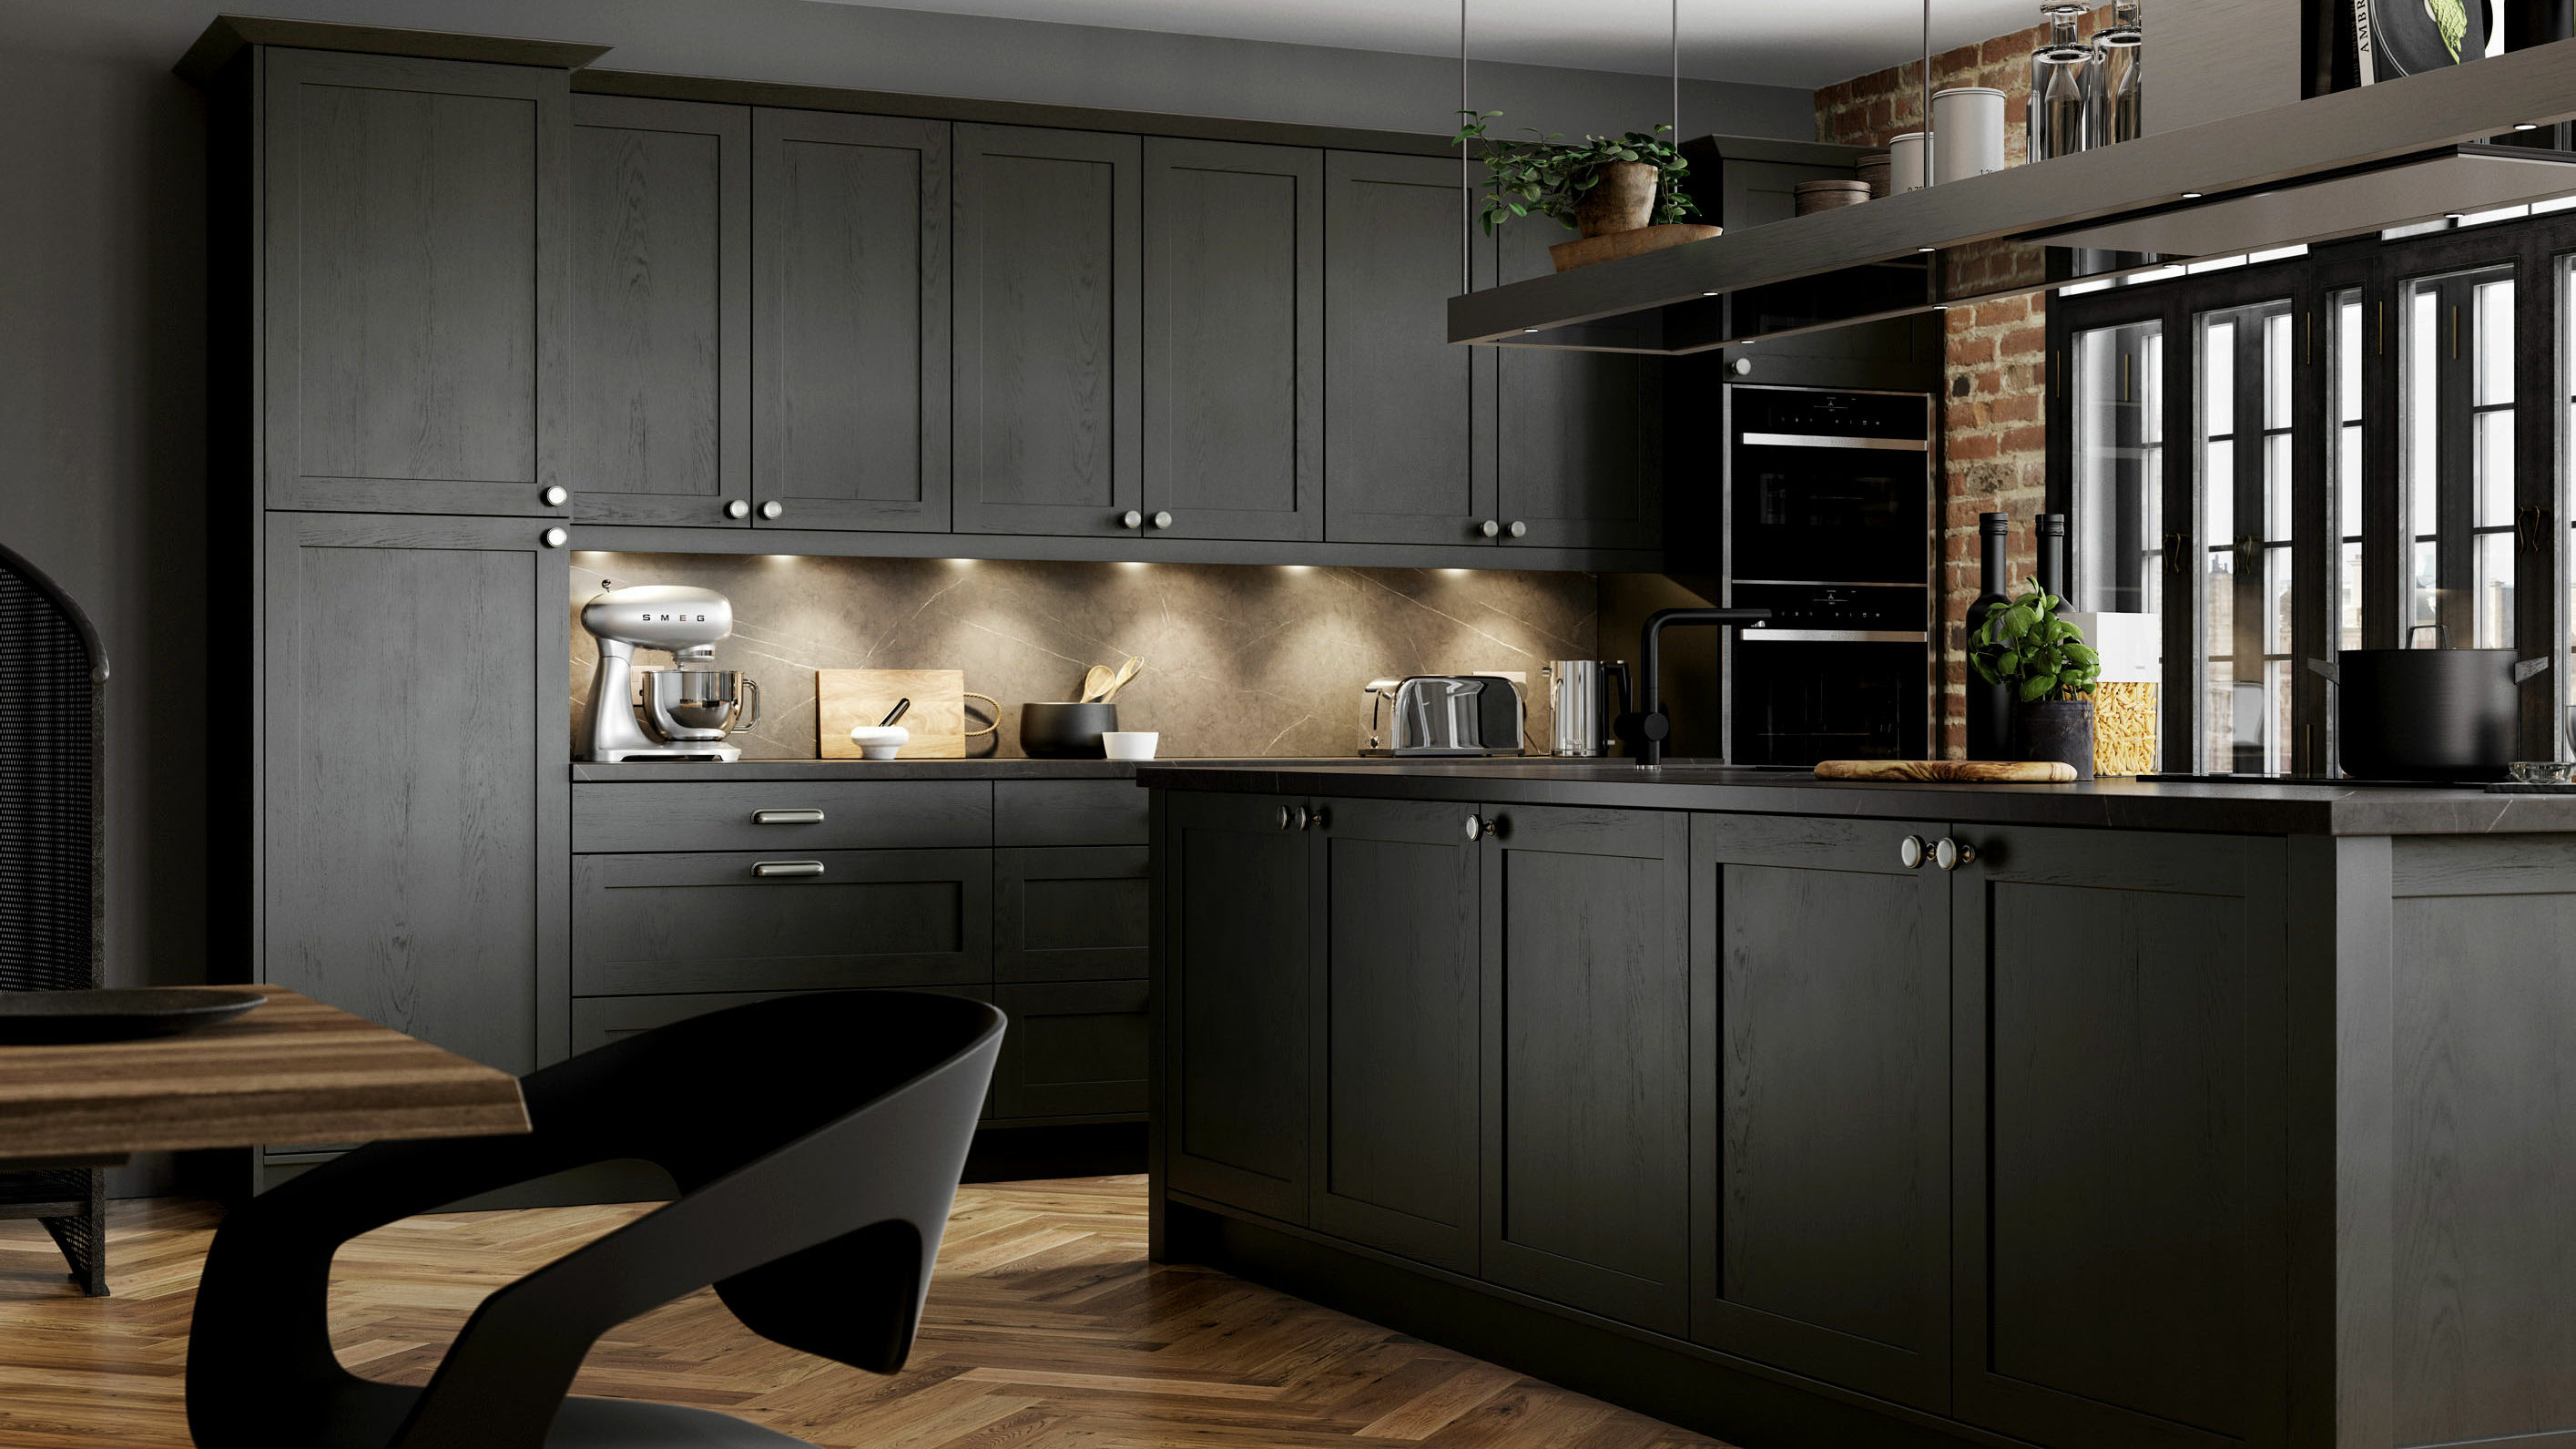 Aldana solid wood Cannon Black kitchens showcasing timeless craftsmanship in a striking black finish